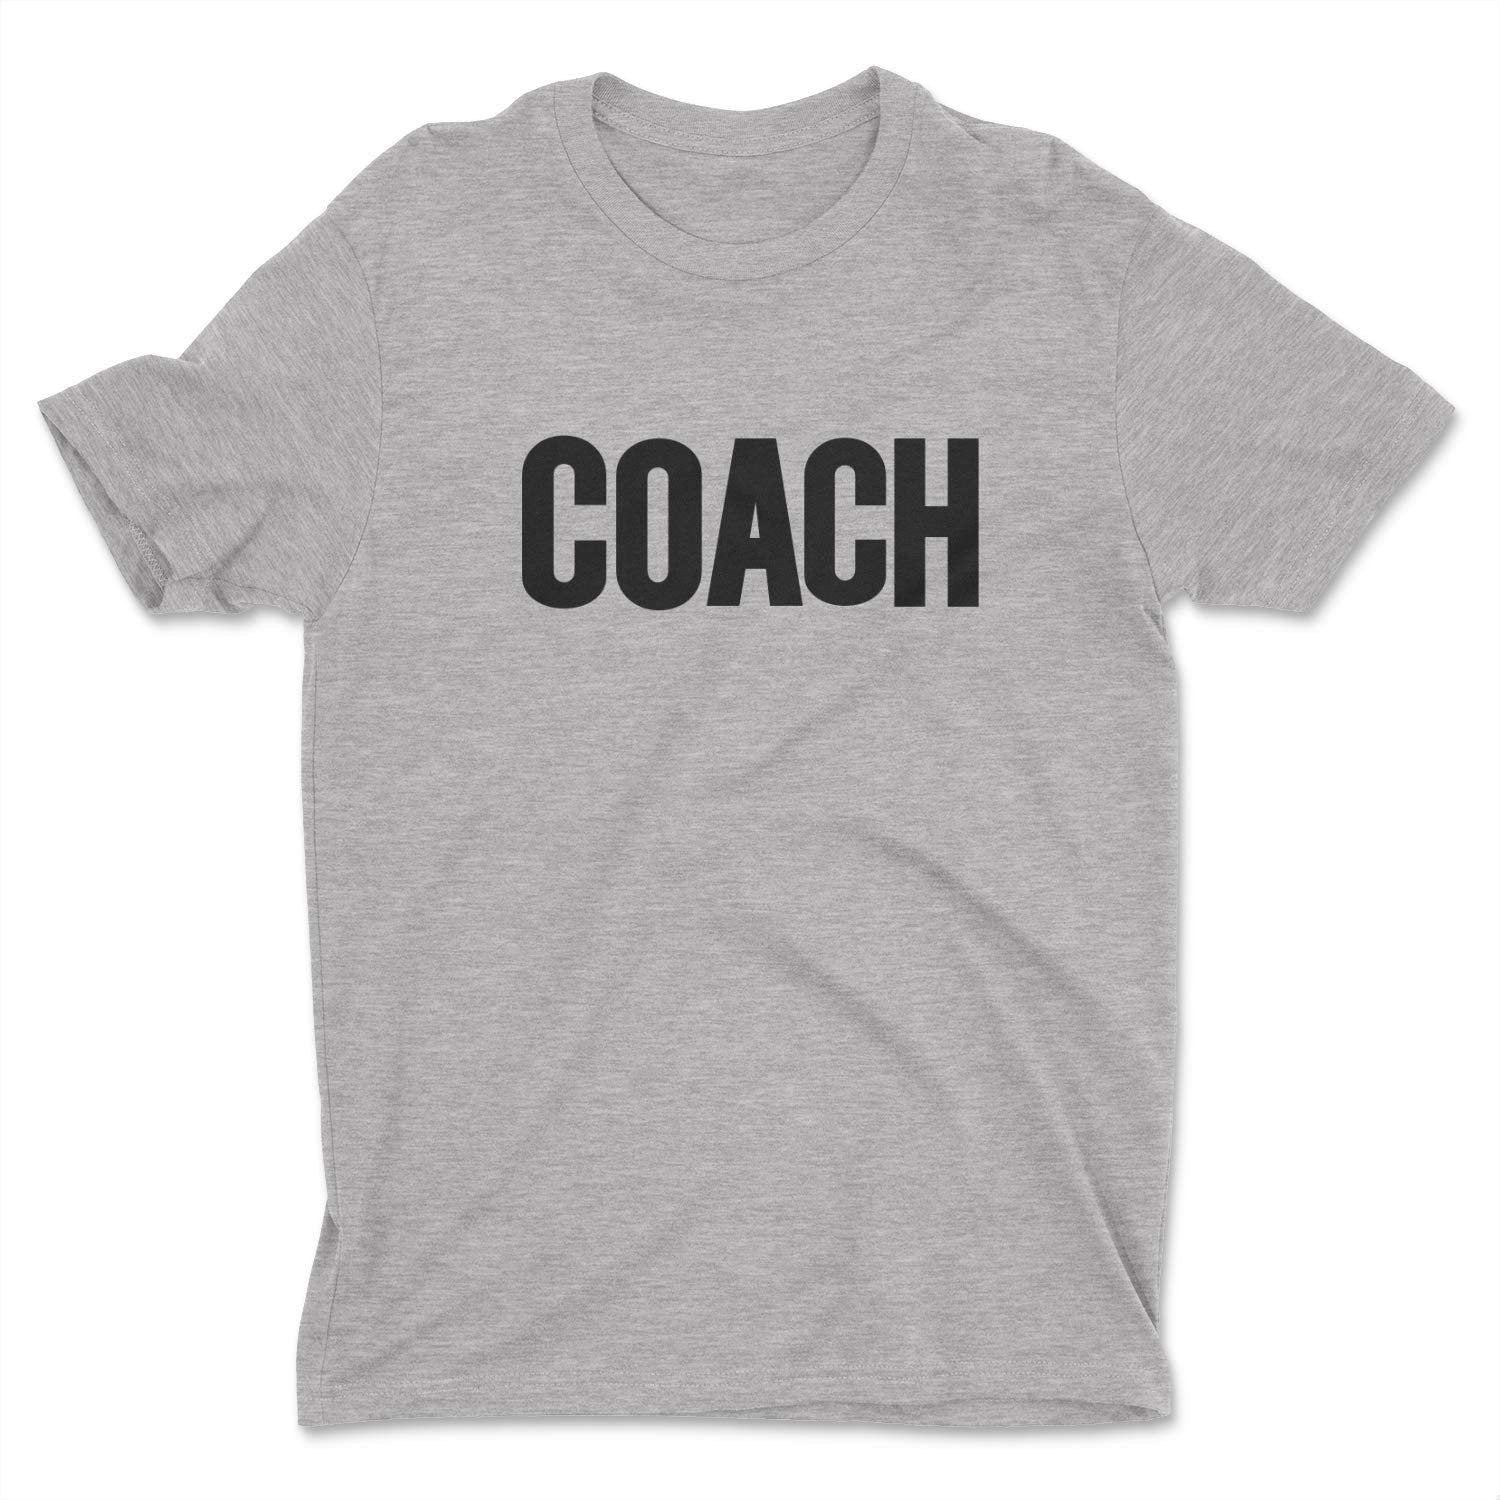 Coach Men's T-Shirt (Solid Design, Heather Gray & Black)